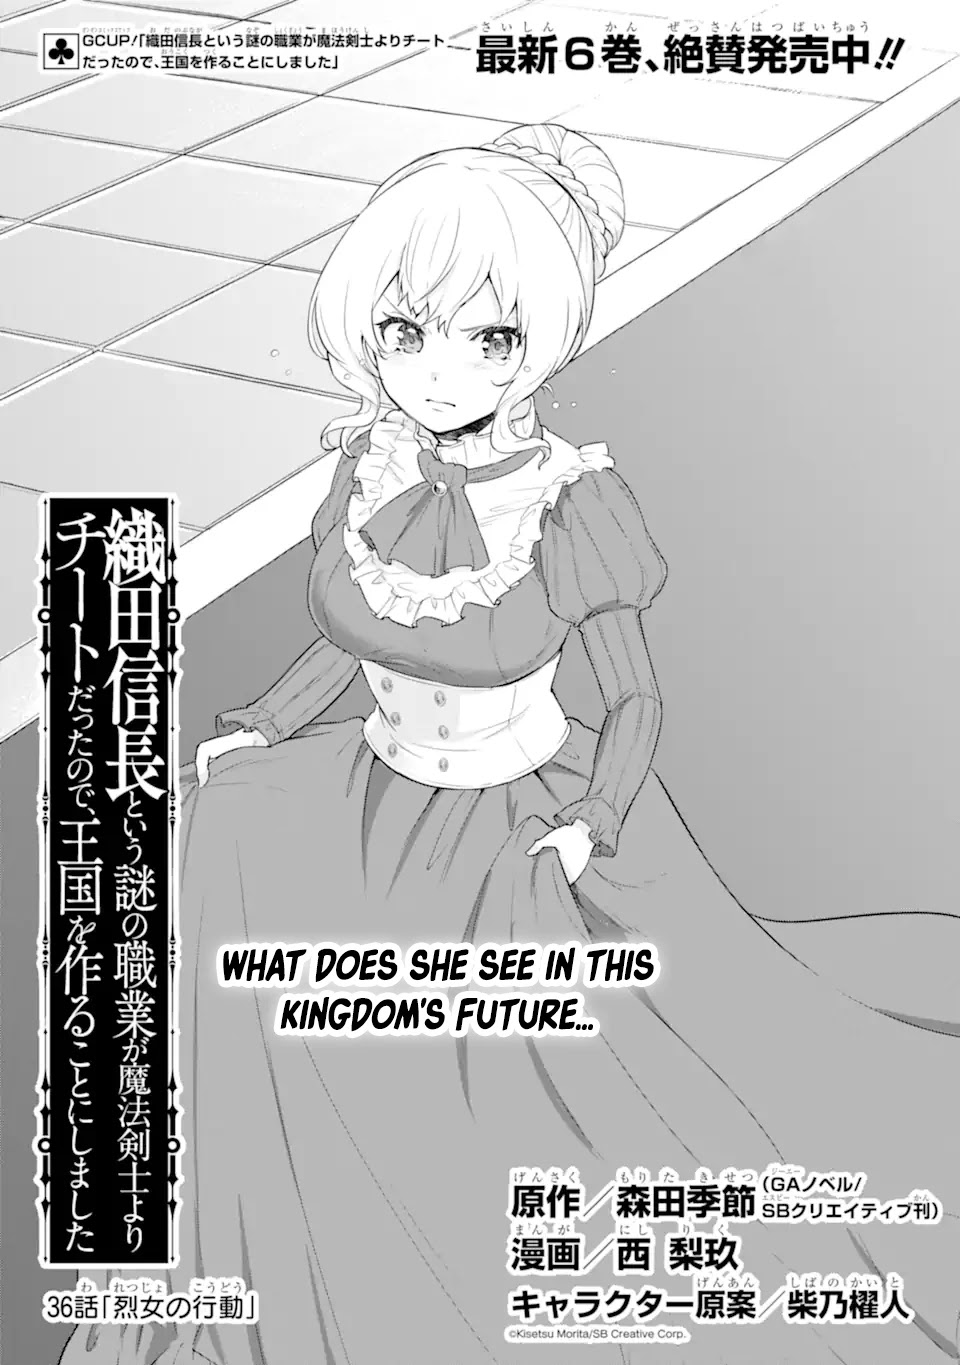 Mysterious Job Called Oda Nobunaga - Page 4